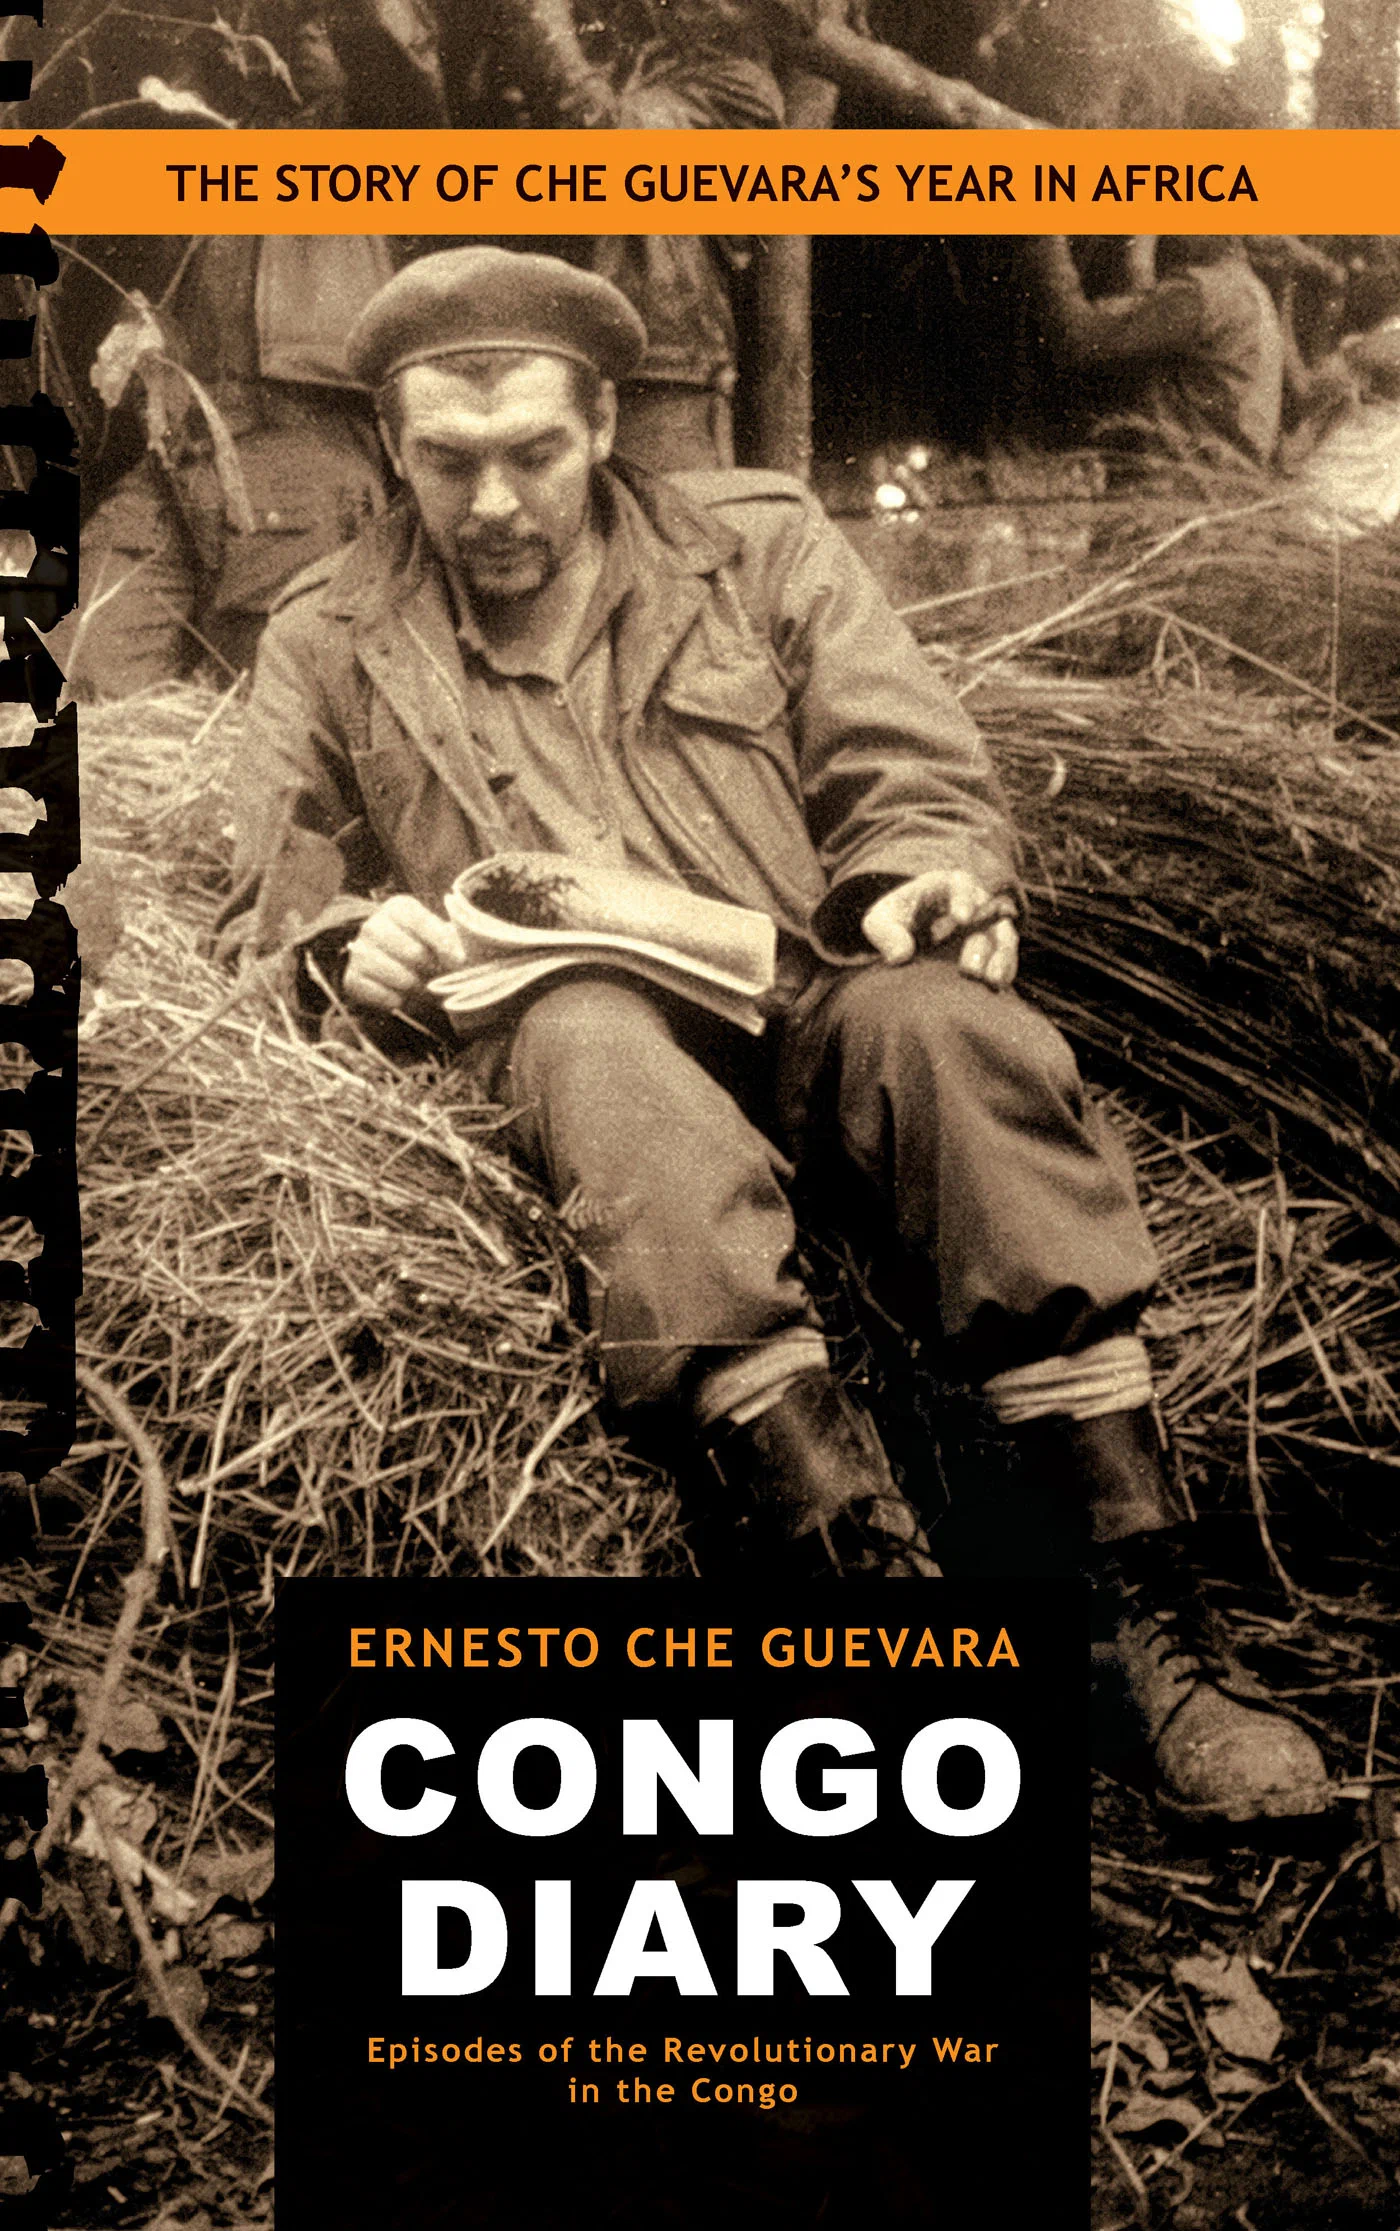 Congo mining money. Part II: Tshombe, Che Guevara and Mobutu - My, Congo, Belgian Congo, Patrice Lumumba, Mobutu, Africa, Banknotes, Bonistics, Collecting, Numismatics, Mining, Minerals, Longpost